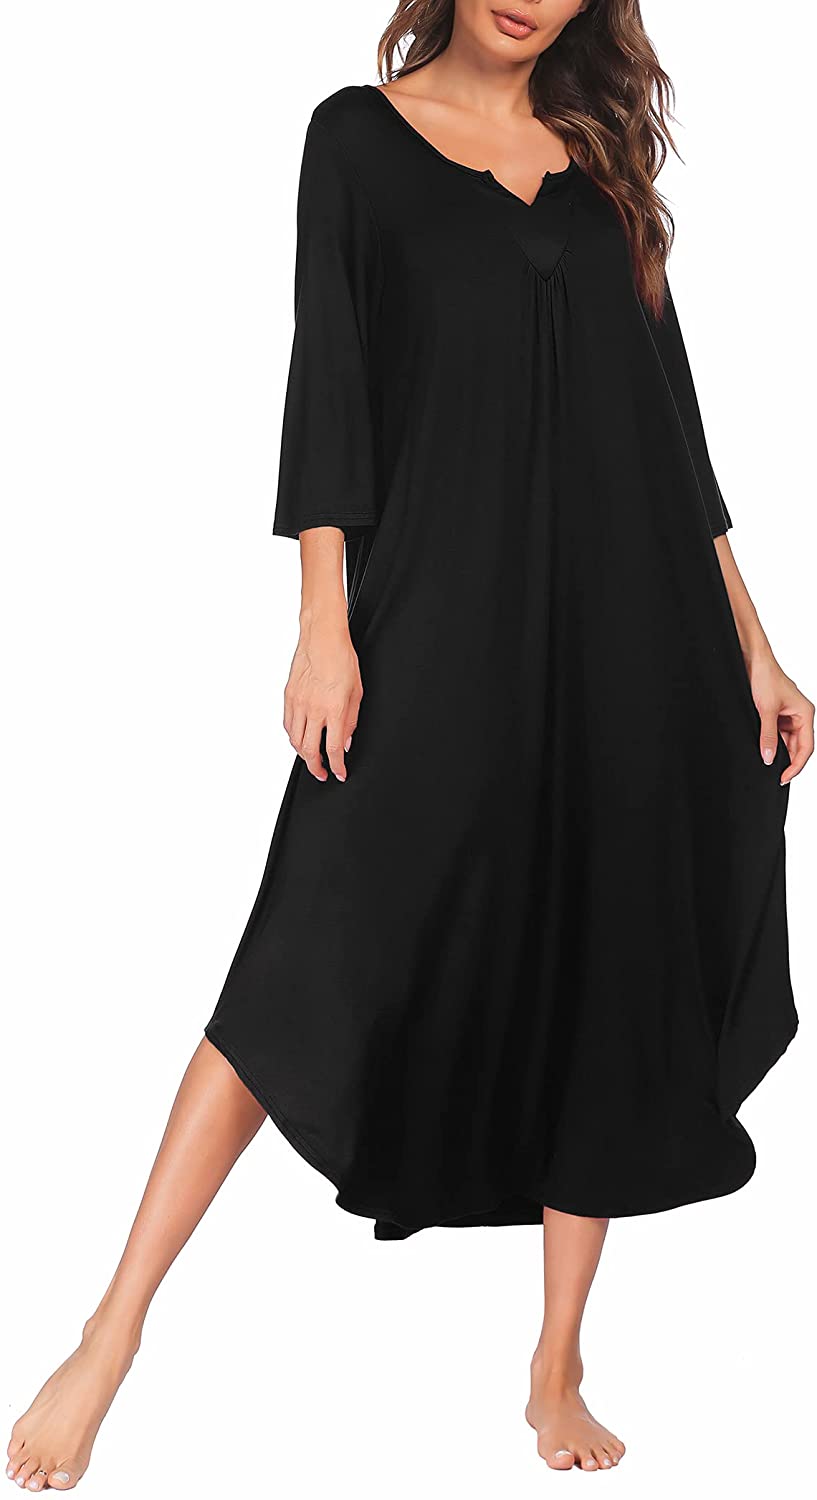 Ekouaer Women's Nightgown Long Sleepshirts Short/Long Sleeve